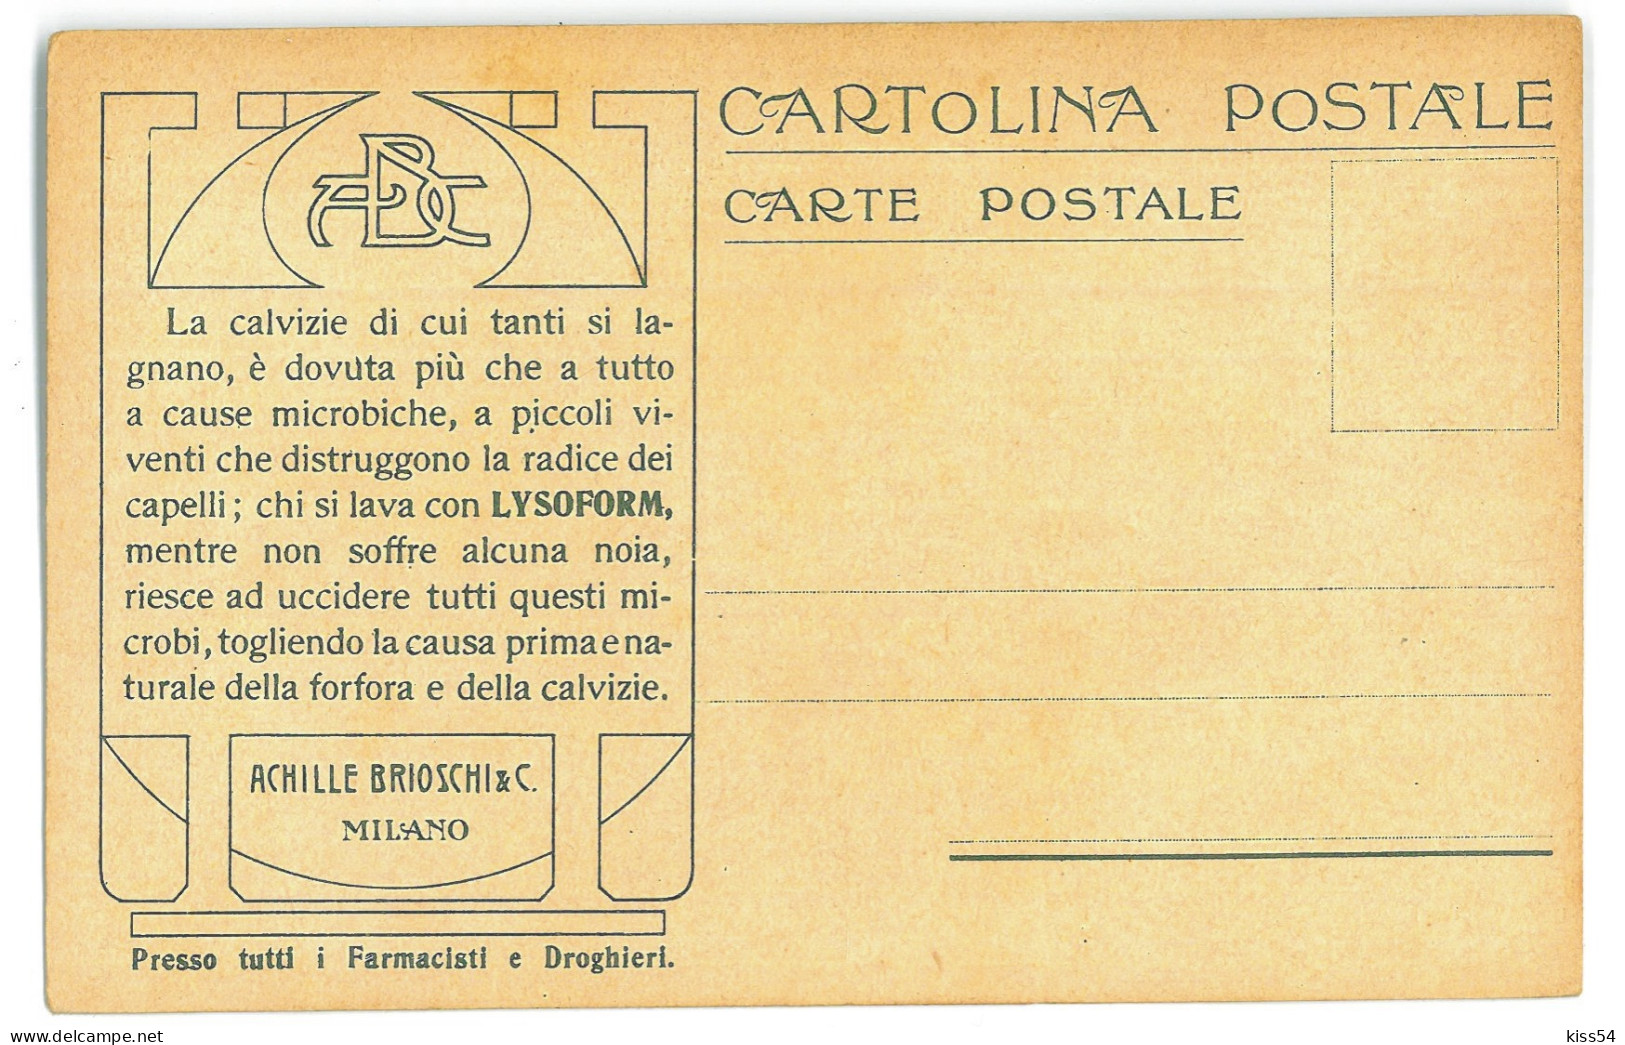 RO 52 - 21376 Flag, Carol I Stamp, POSTMAN, BIKE, Ethnic Woman, Litho, Romania - Old Postcard - Unused - Roumanie